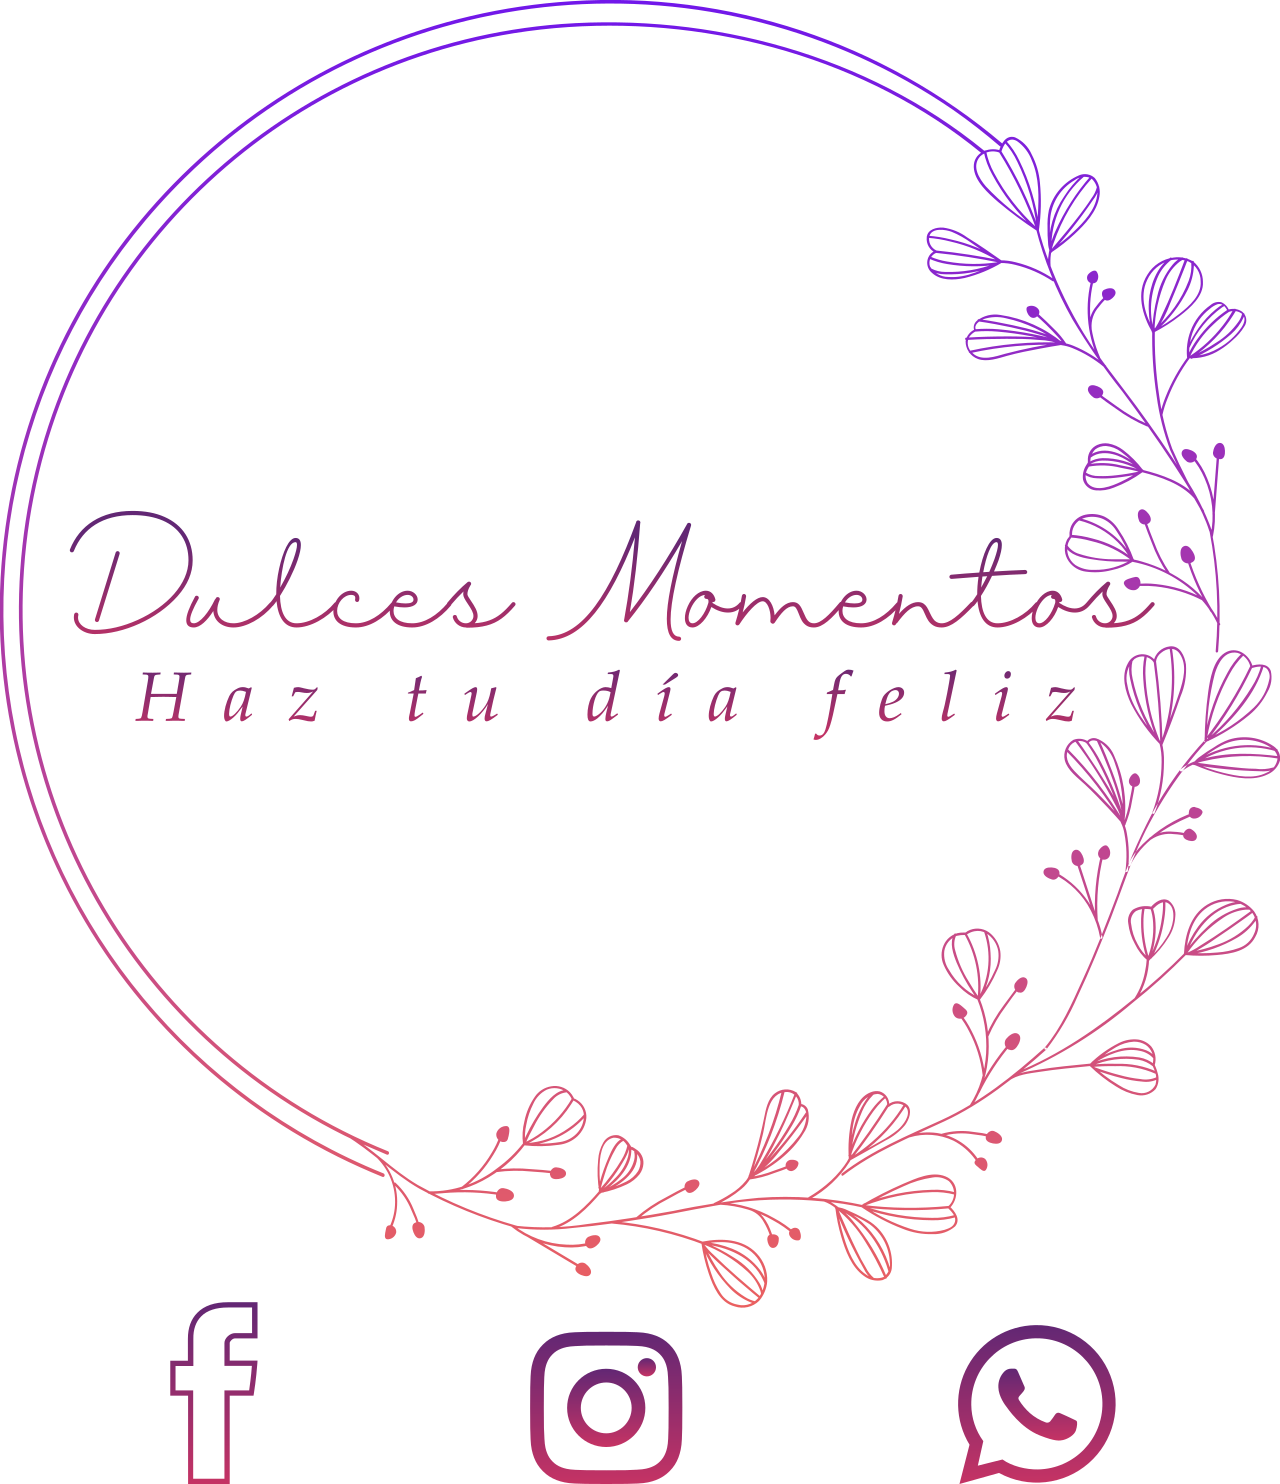 Dulces Momentos's web page